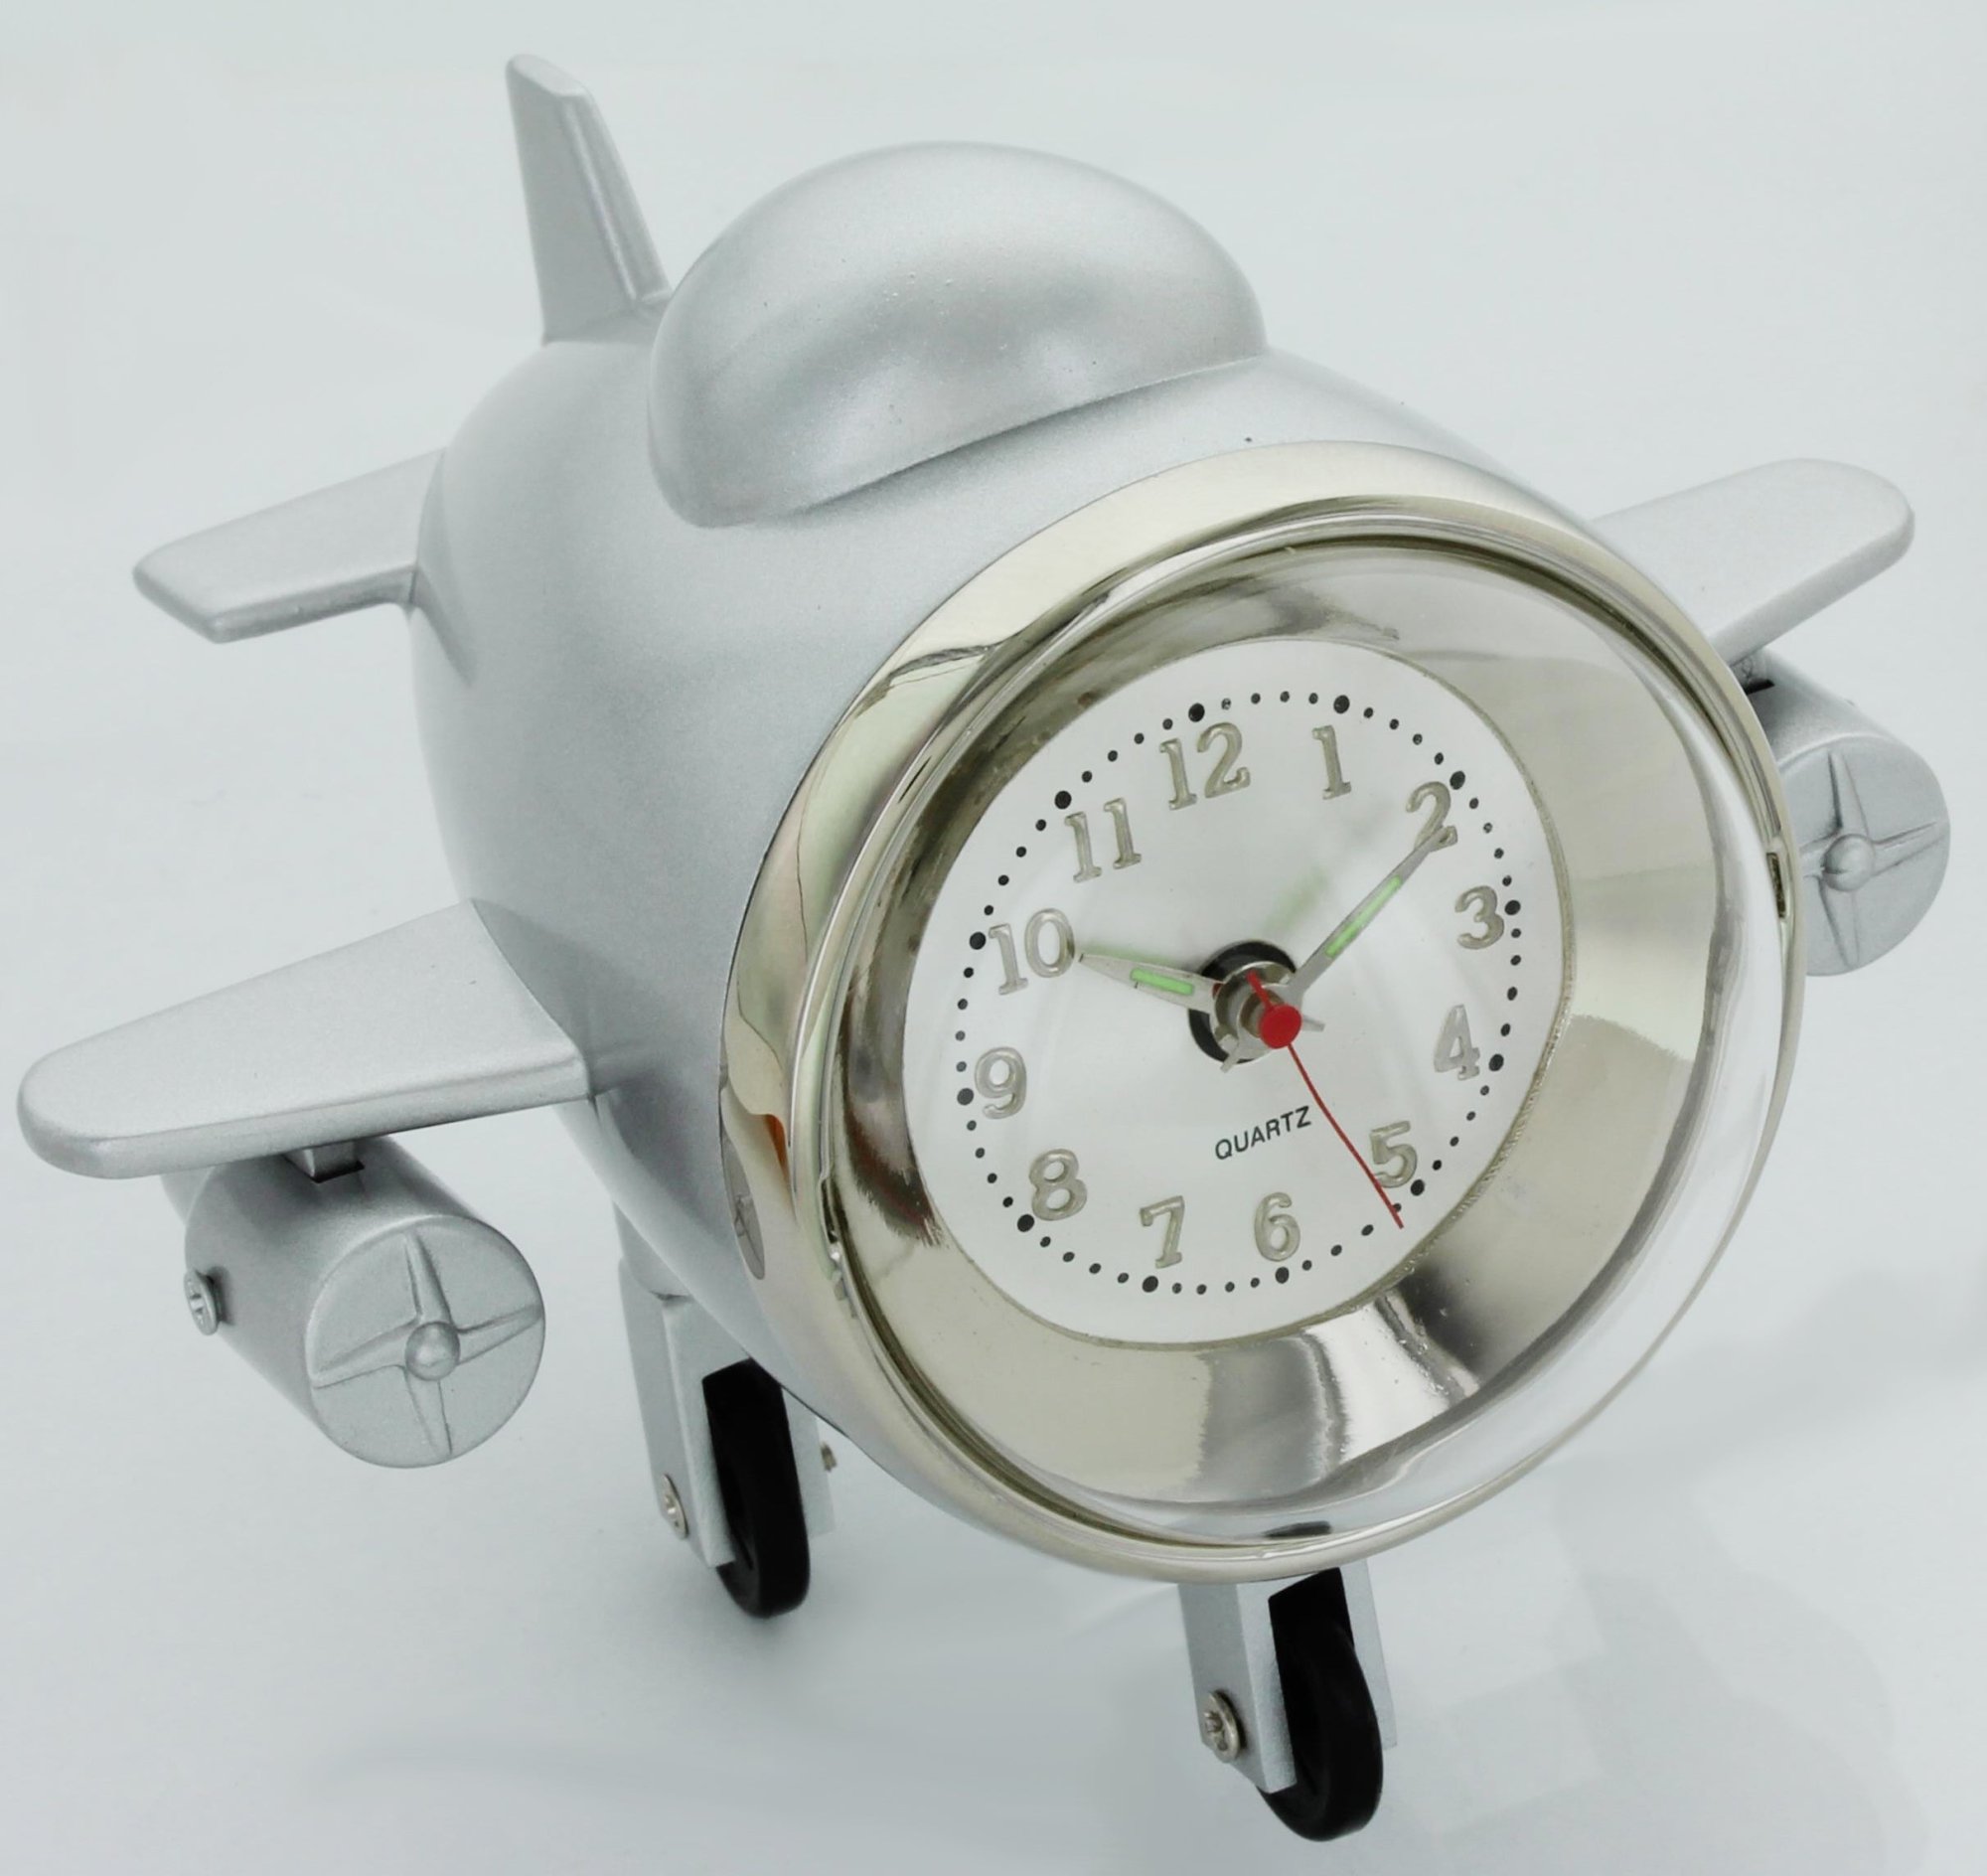 Model: Collectible Miniature Airplane Alarm Clock